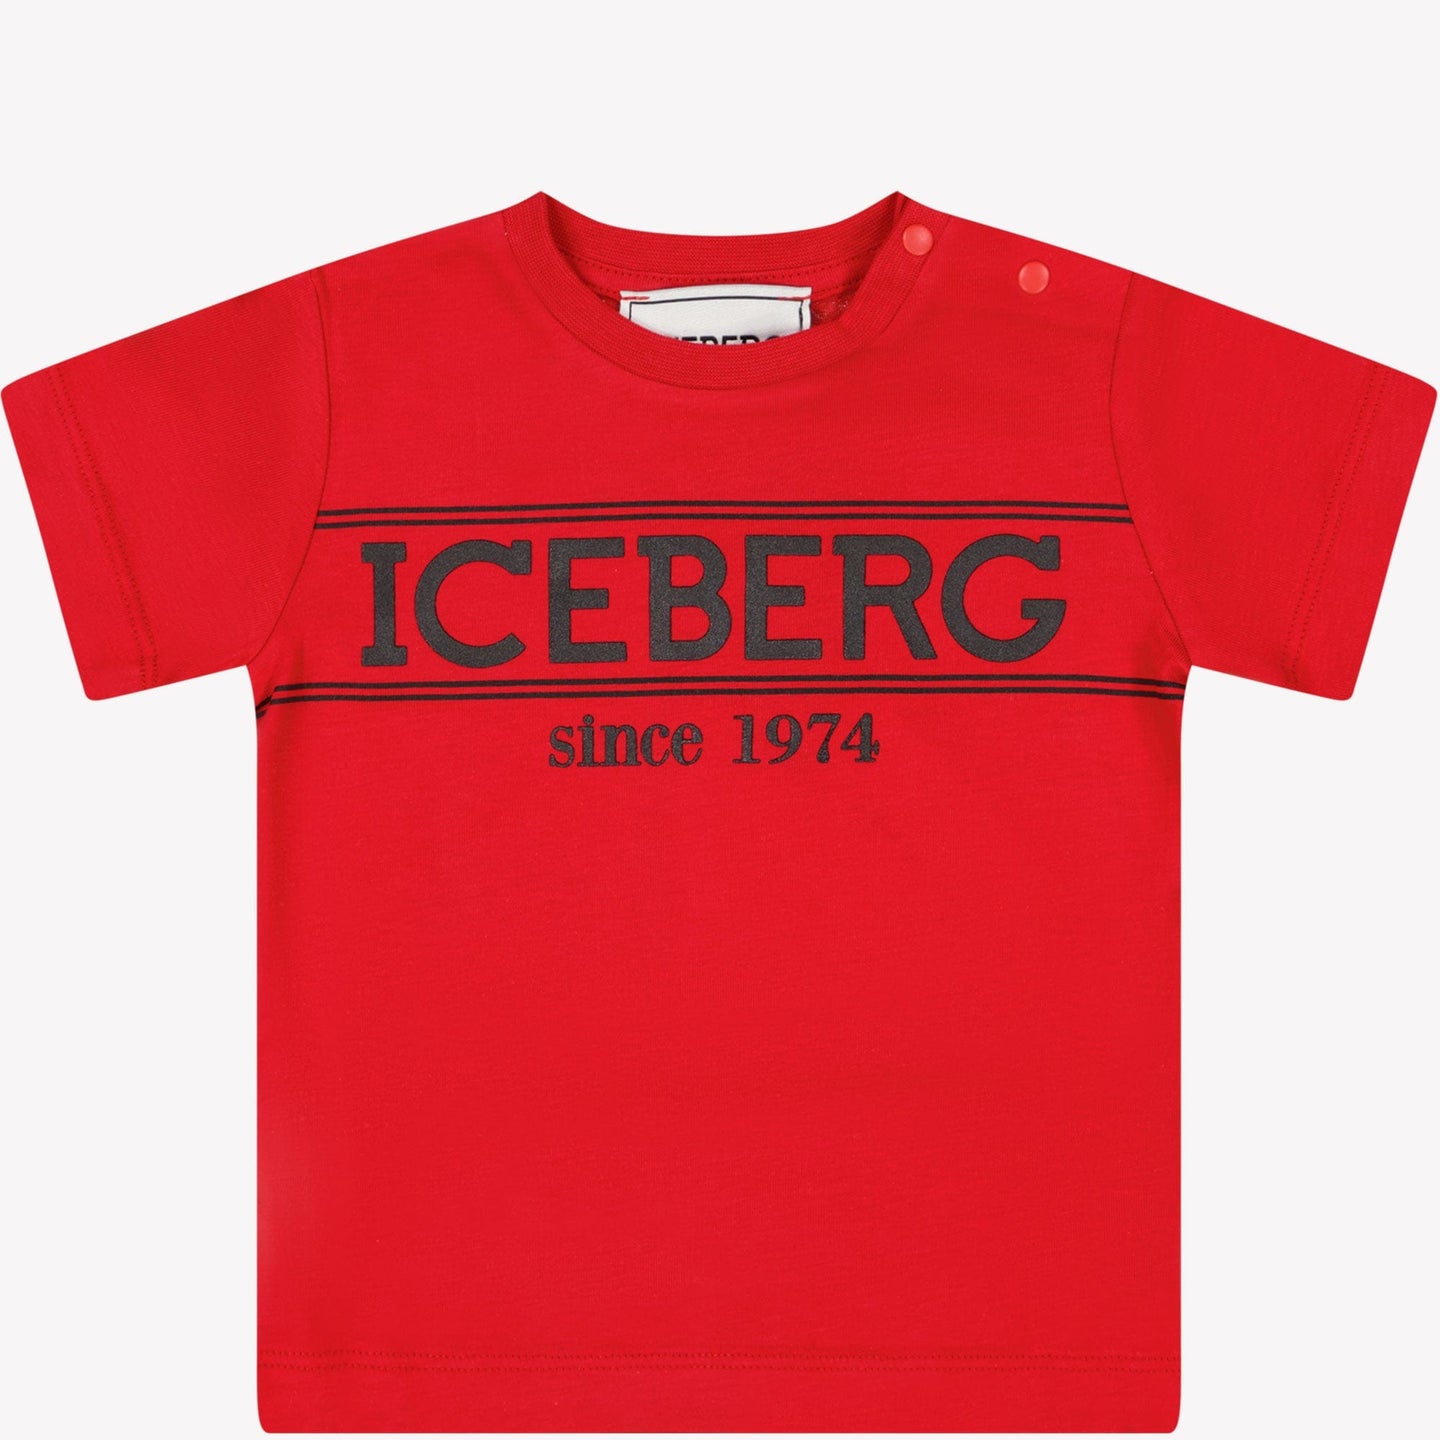 Iceberg Baby Jongens T-shirt Rood 6 mnd